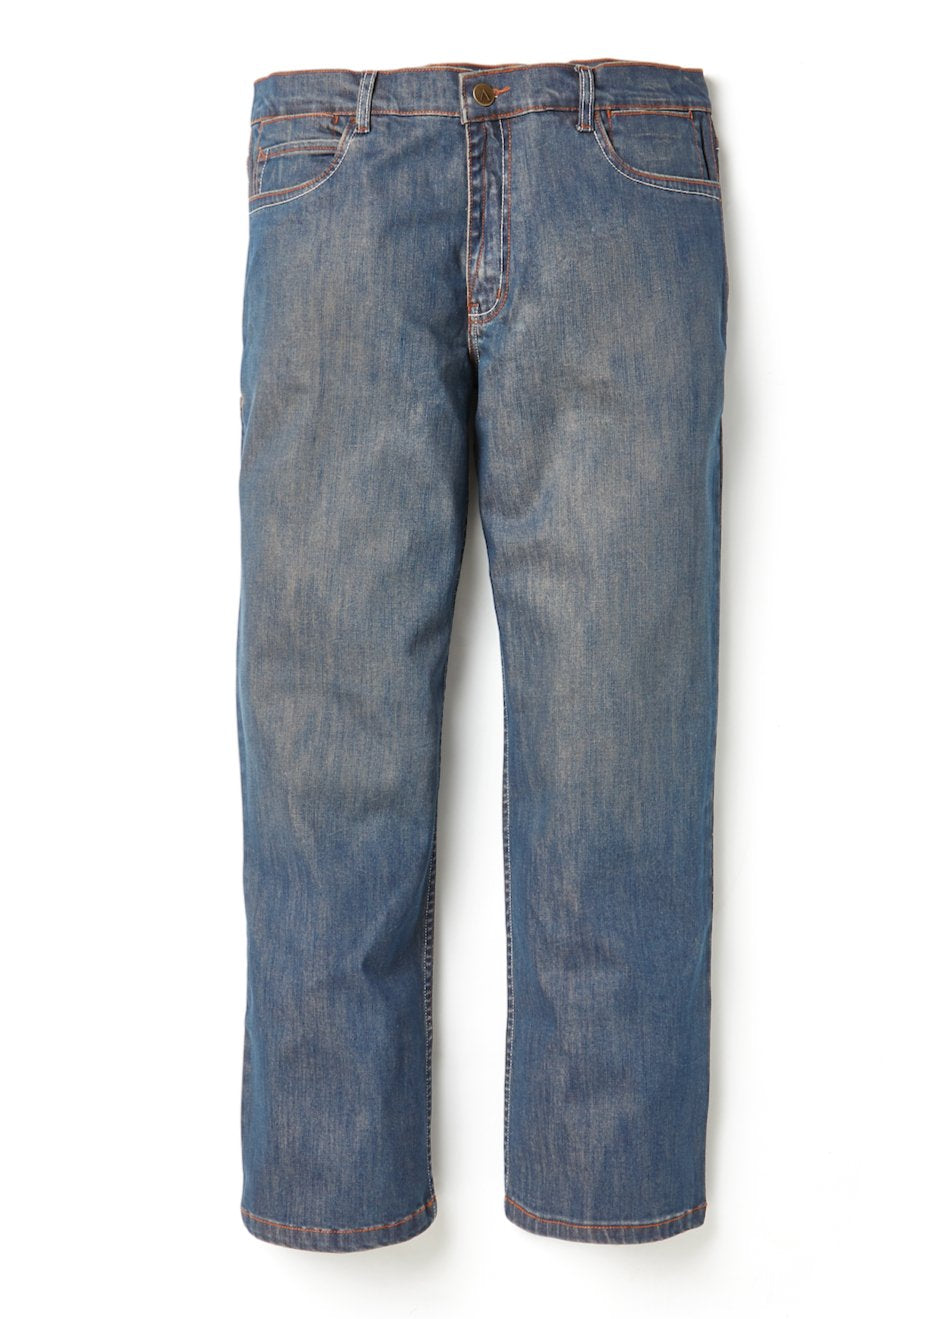 FR Stretch Jeans- Blue (CLOSEOUT) - Rasco FR